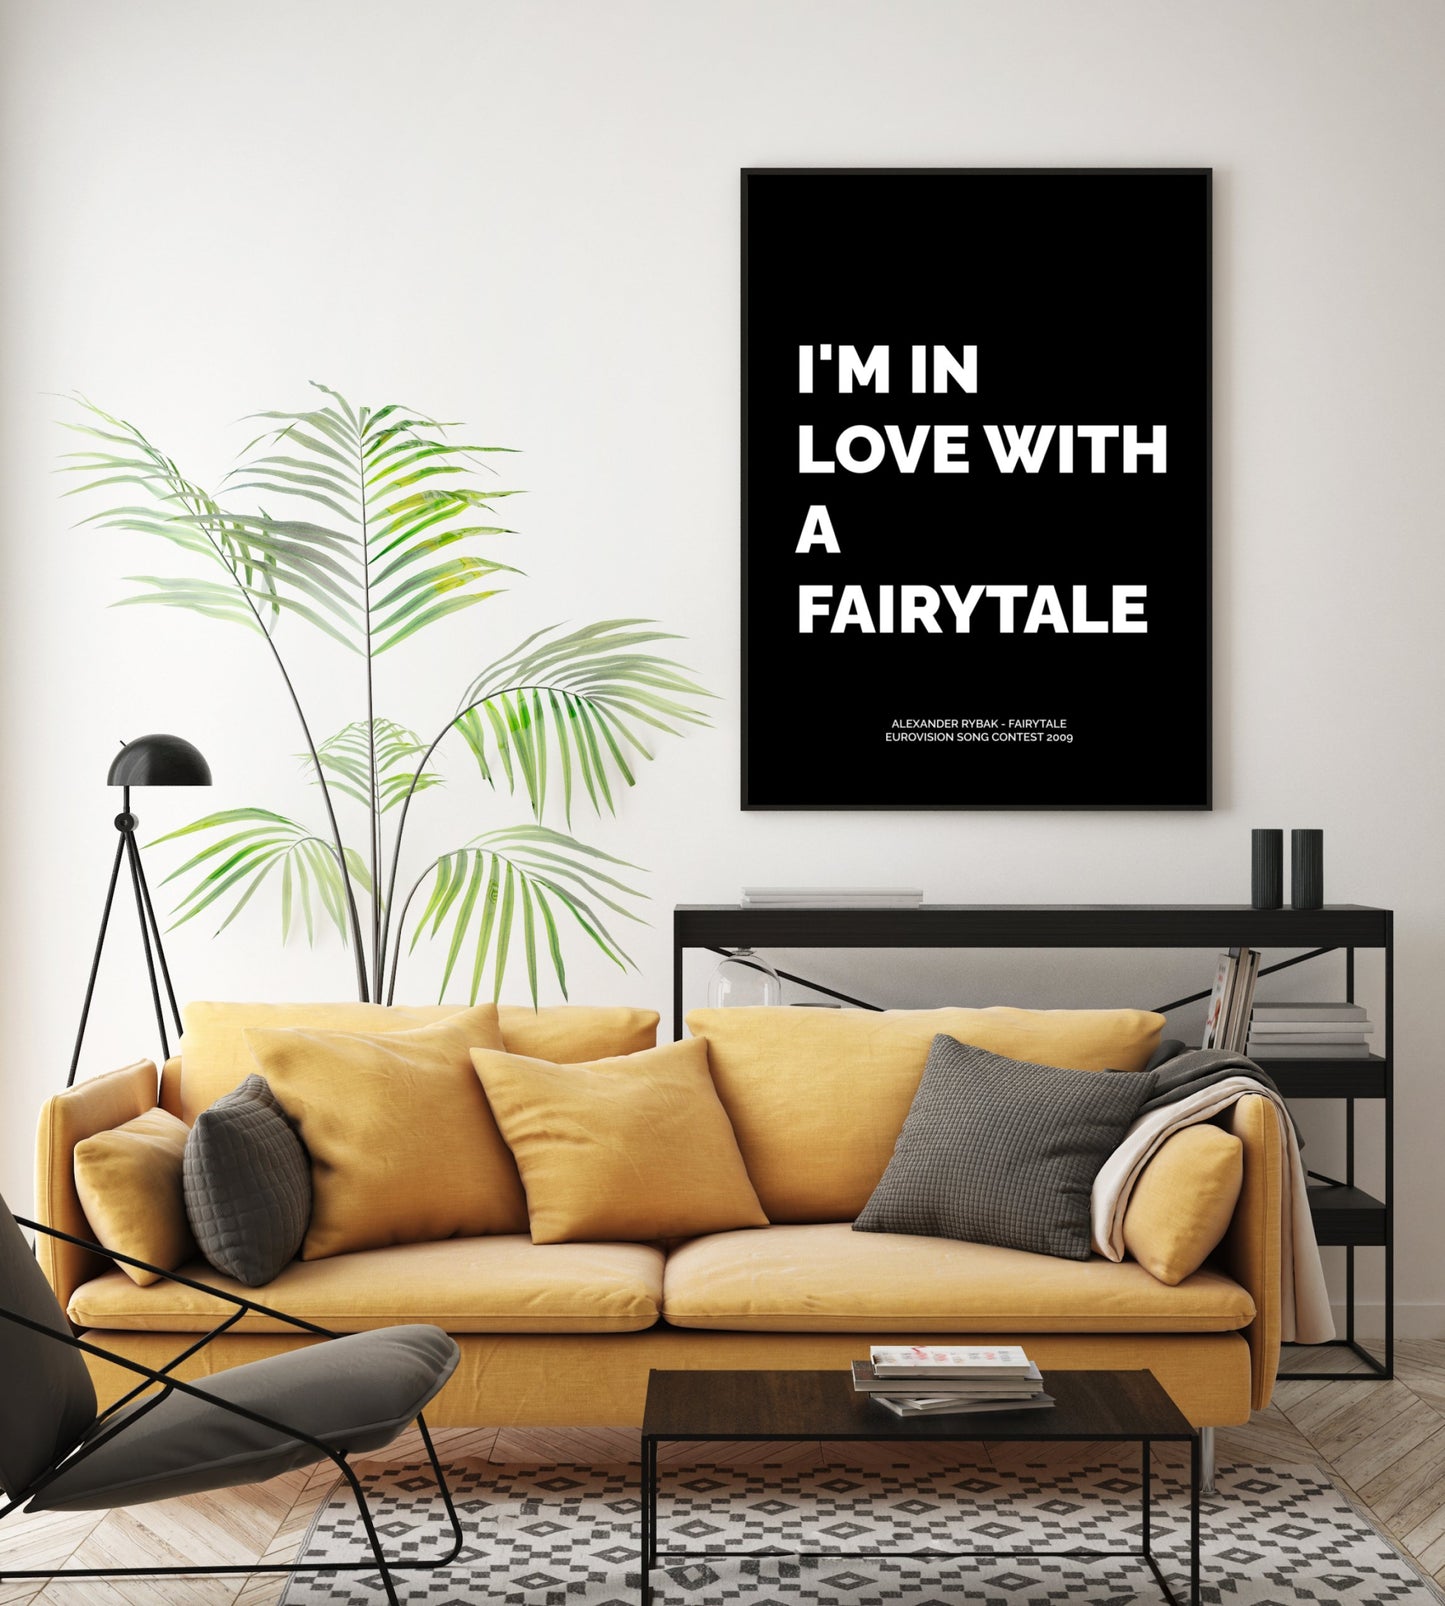 Poster Alexander Rybak - Fairytale (2009)